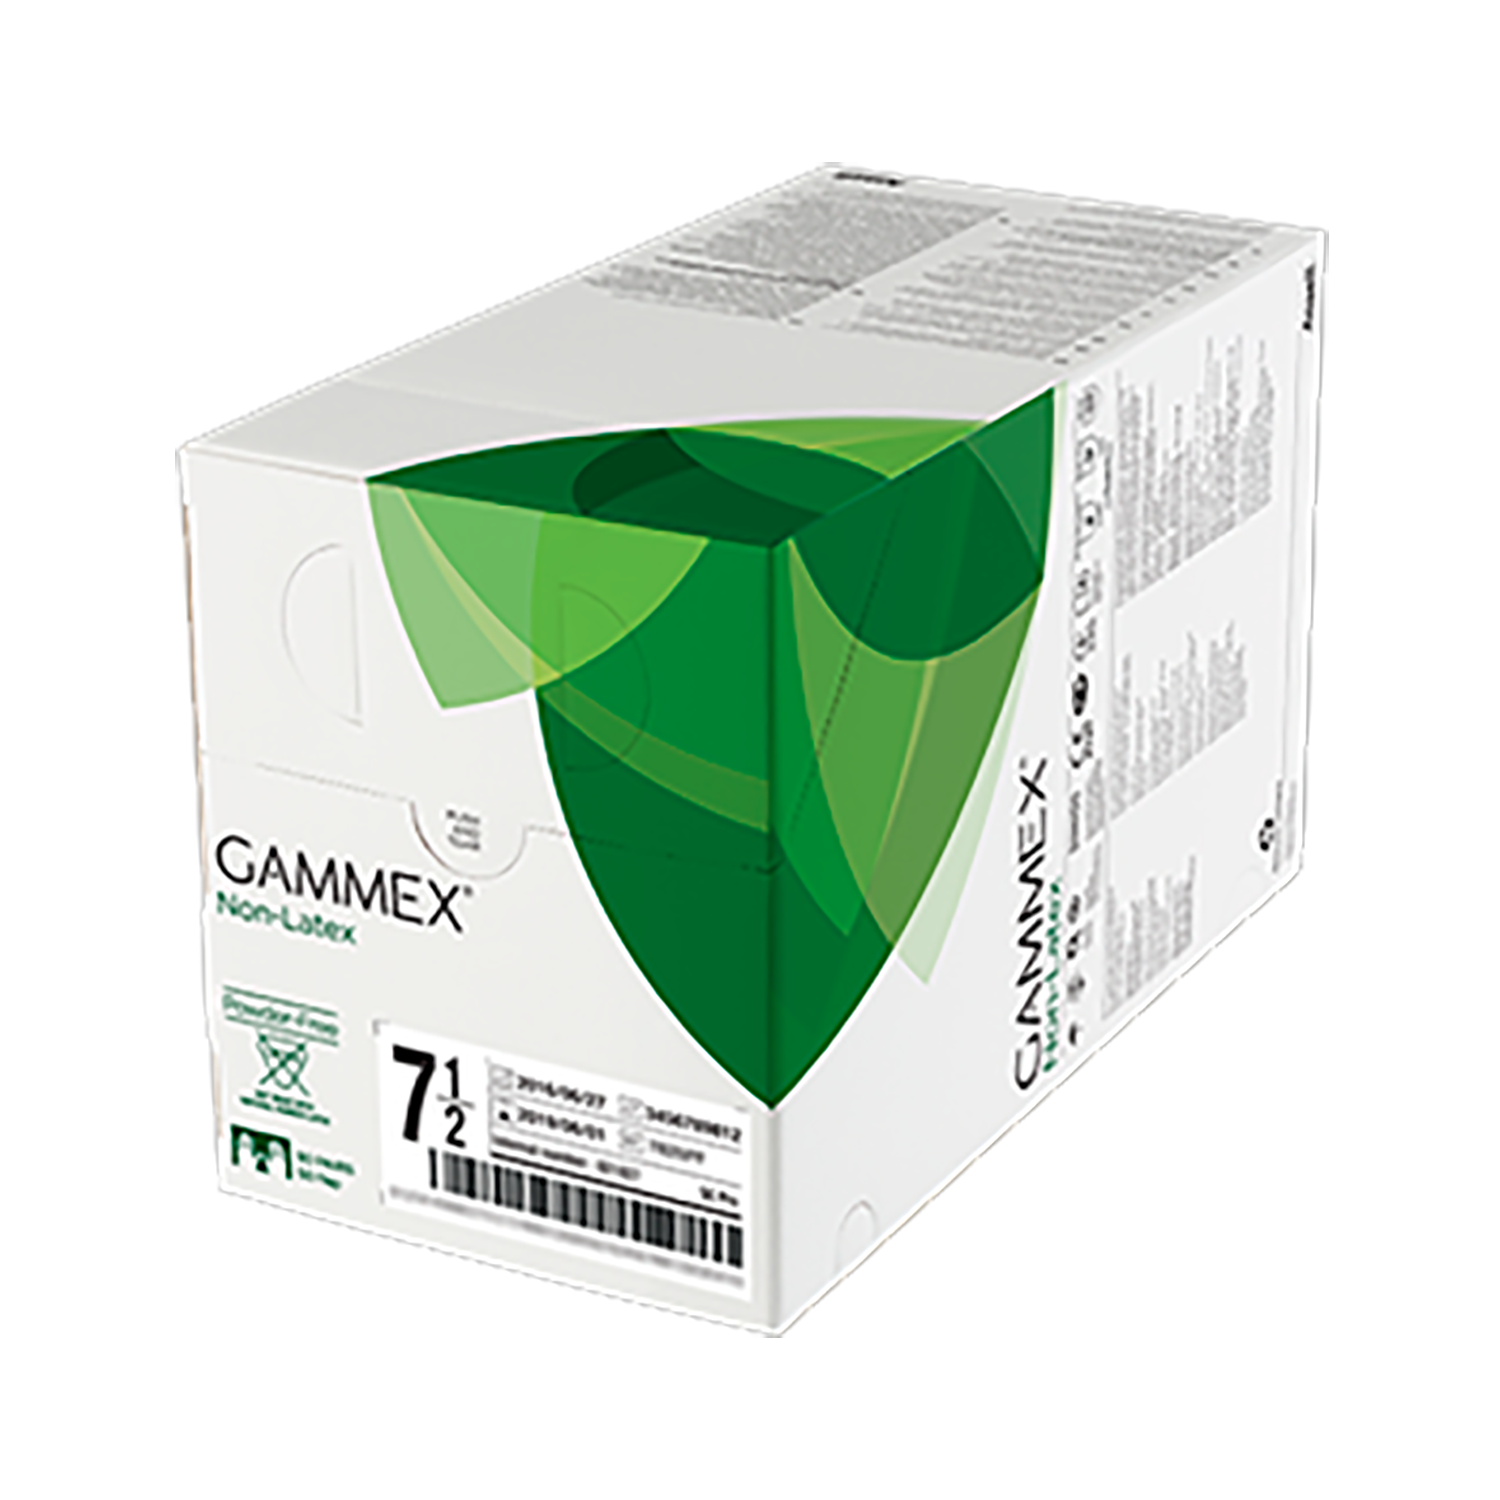 Gammex PF Green Gloves | Non Latex | Sterile | Neoprene | Size 6.5 | Pack of 50 (1)